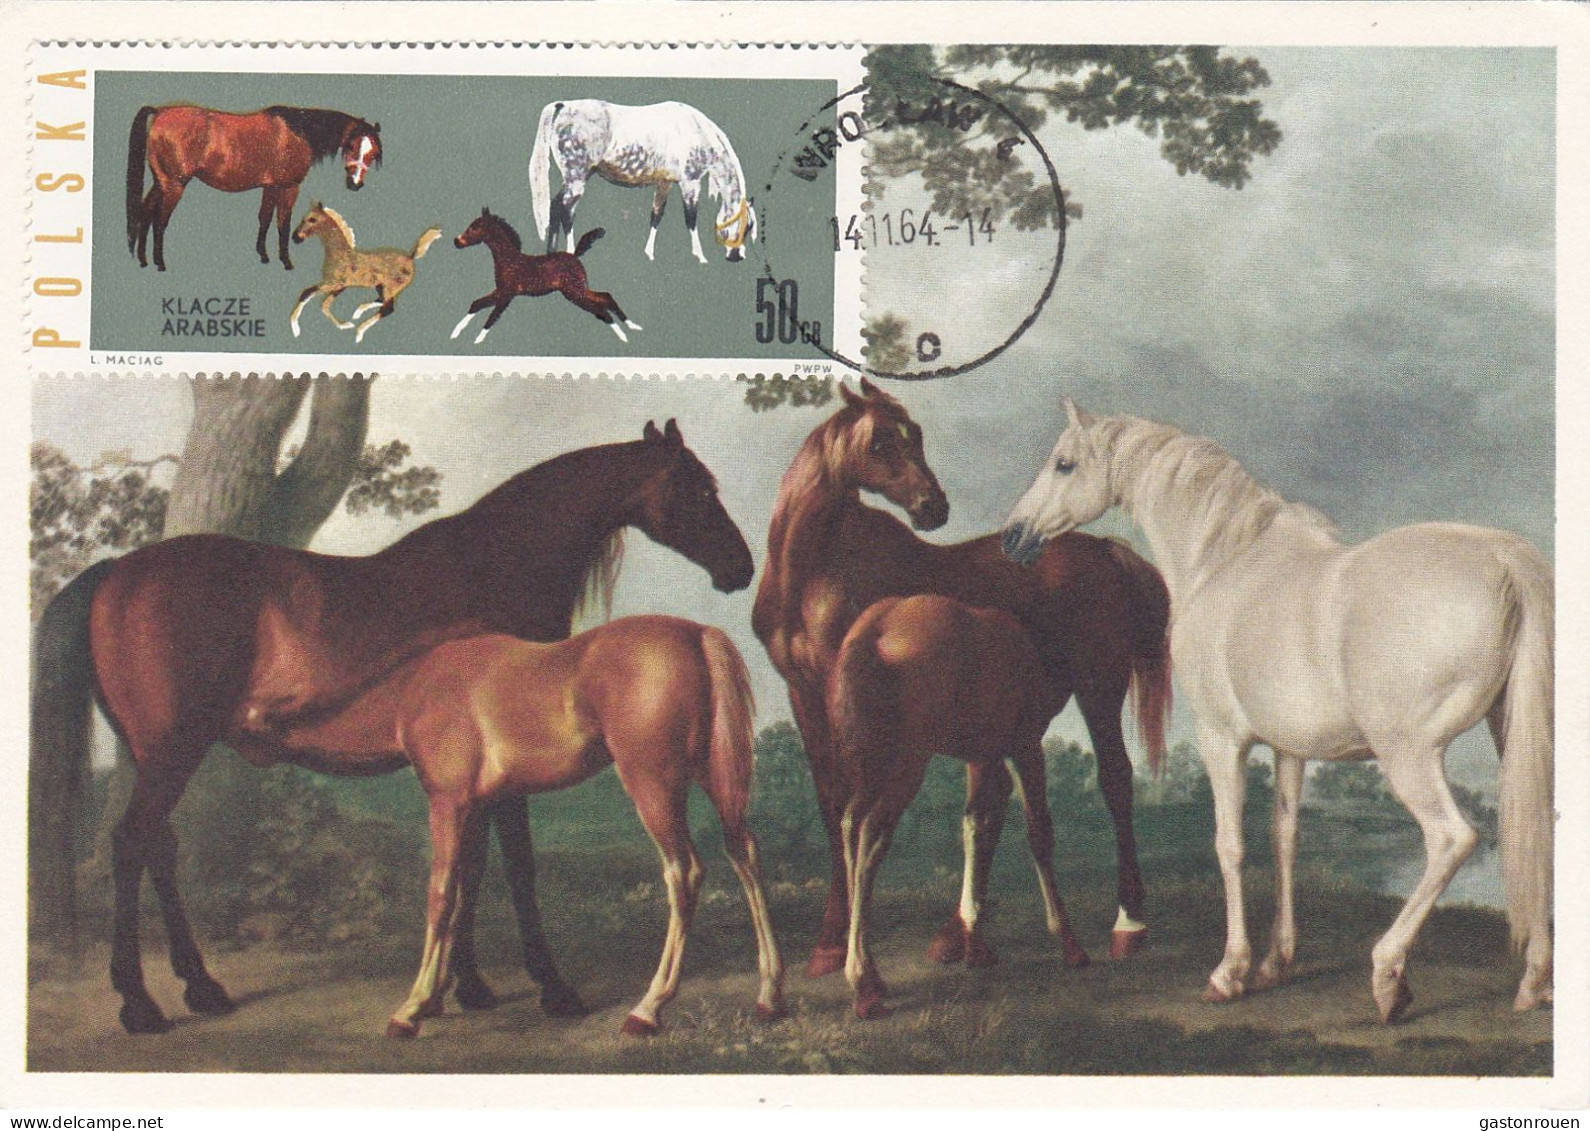 Carte Maximum Hongrie Hungary Cheval Horse 1315 - Cartoline Maximum